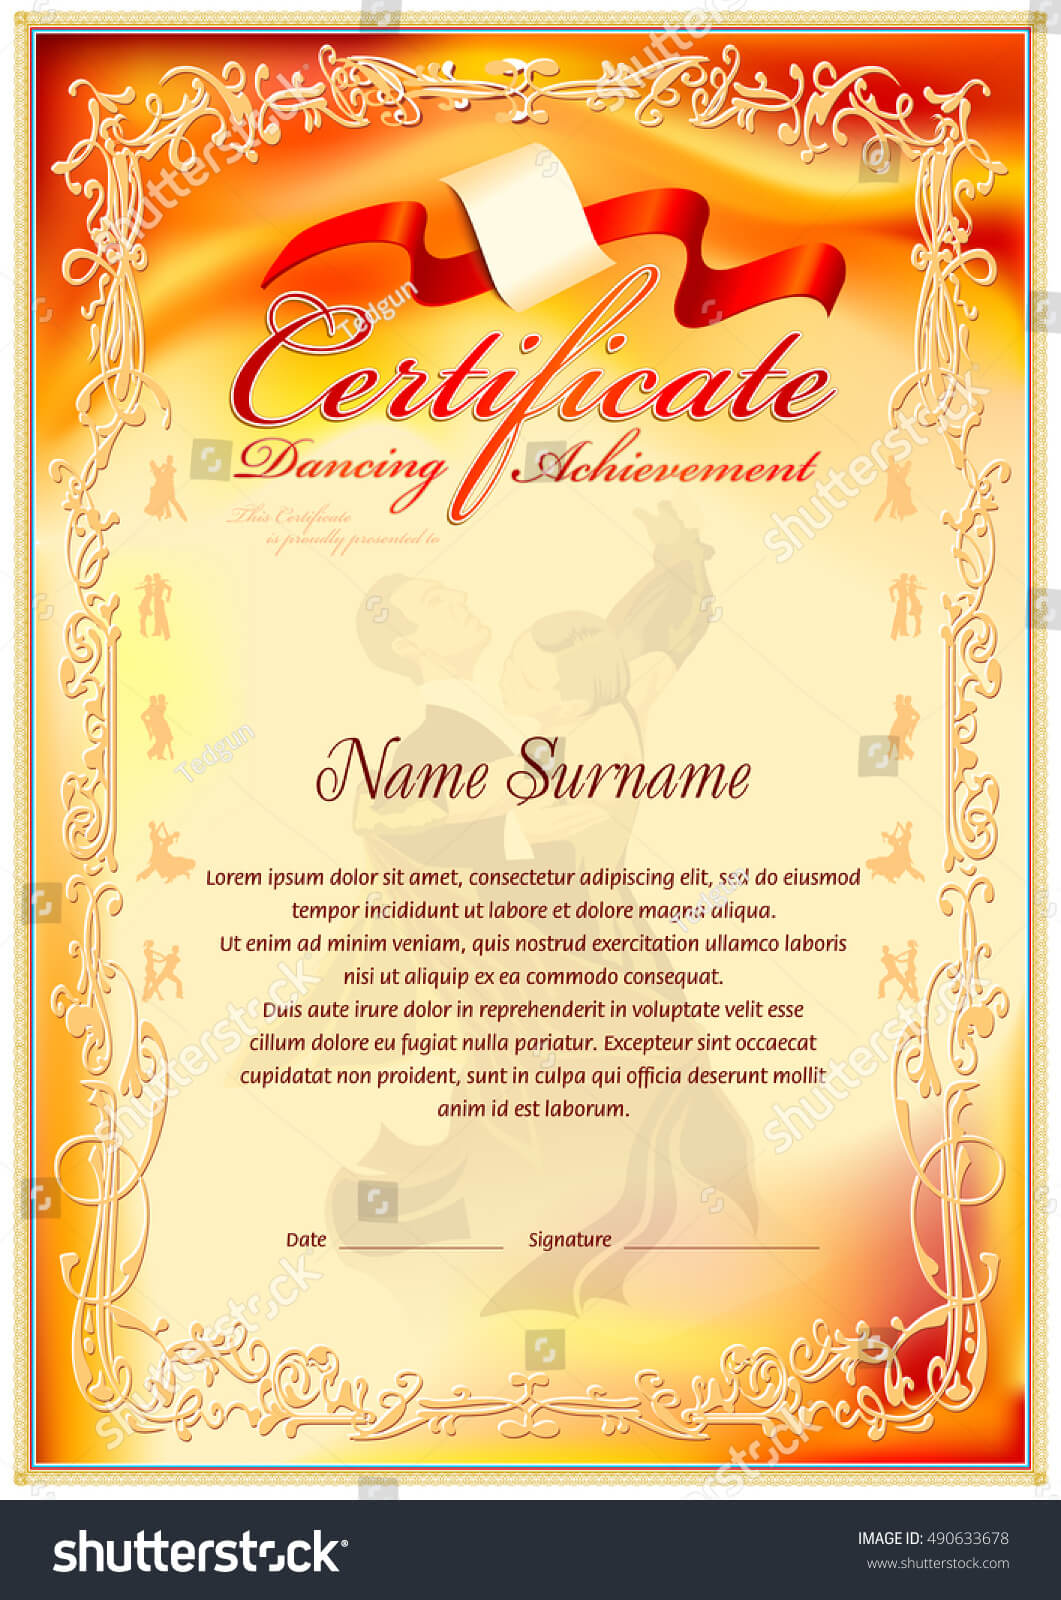 Dancing Achievement Certificate Template Vintage Frame Stock Regarding Dance Certificate Template